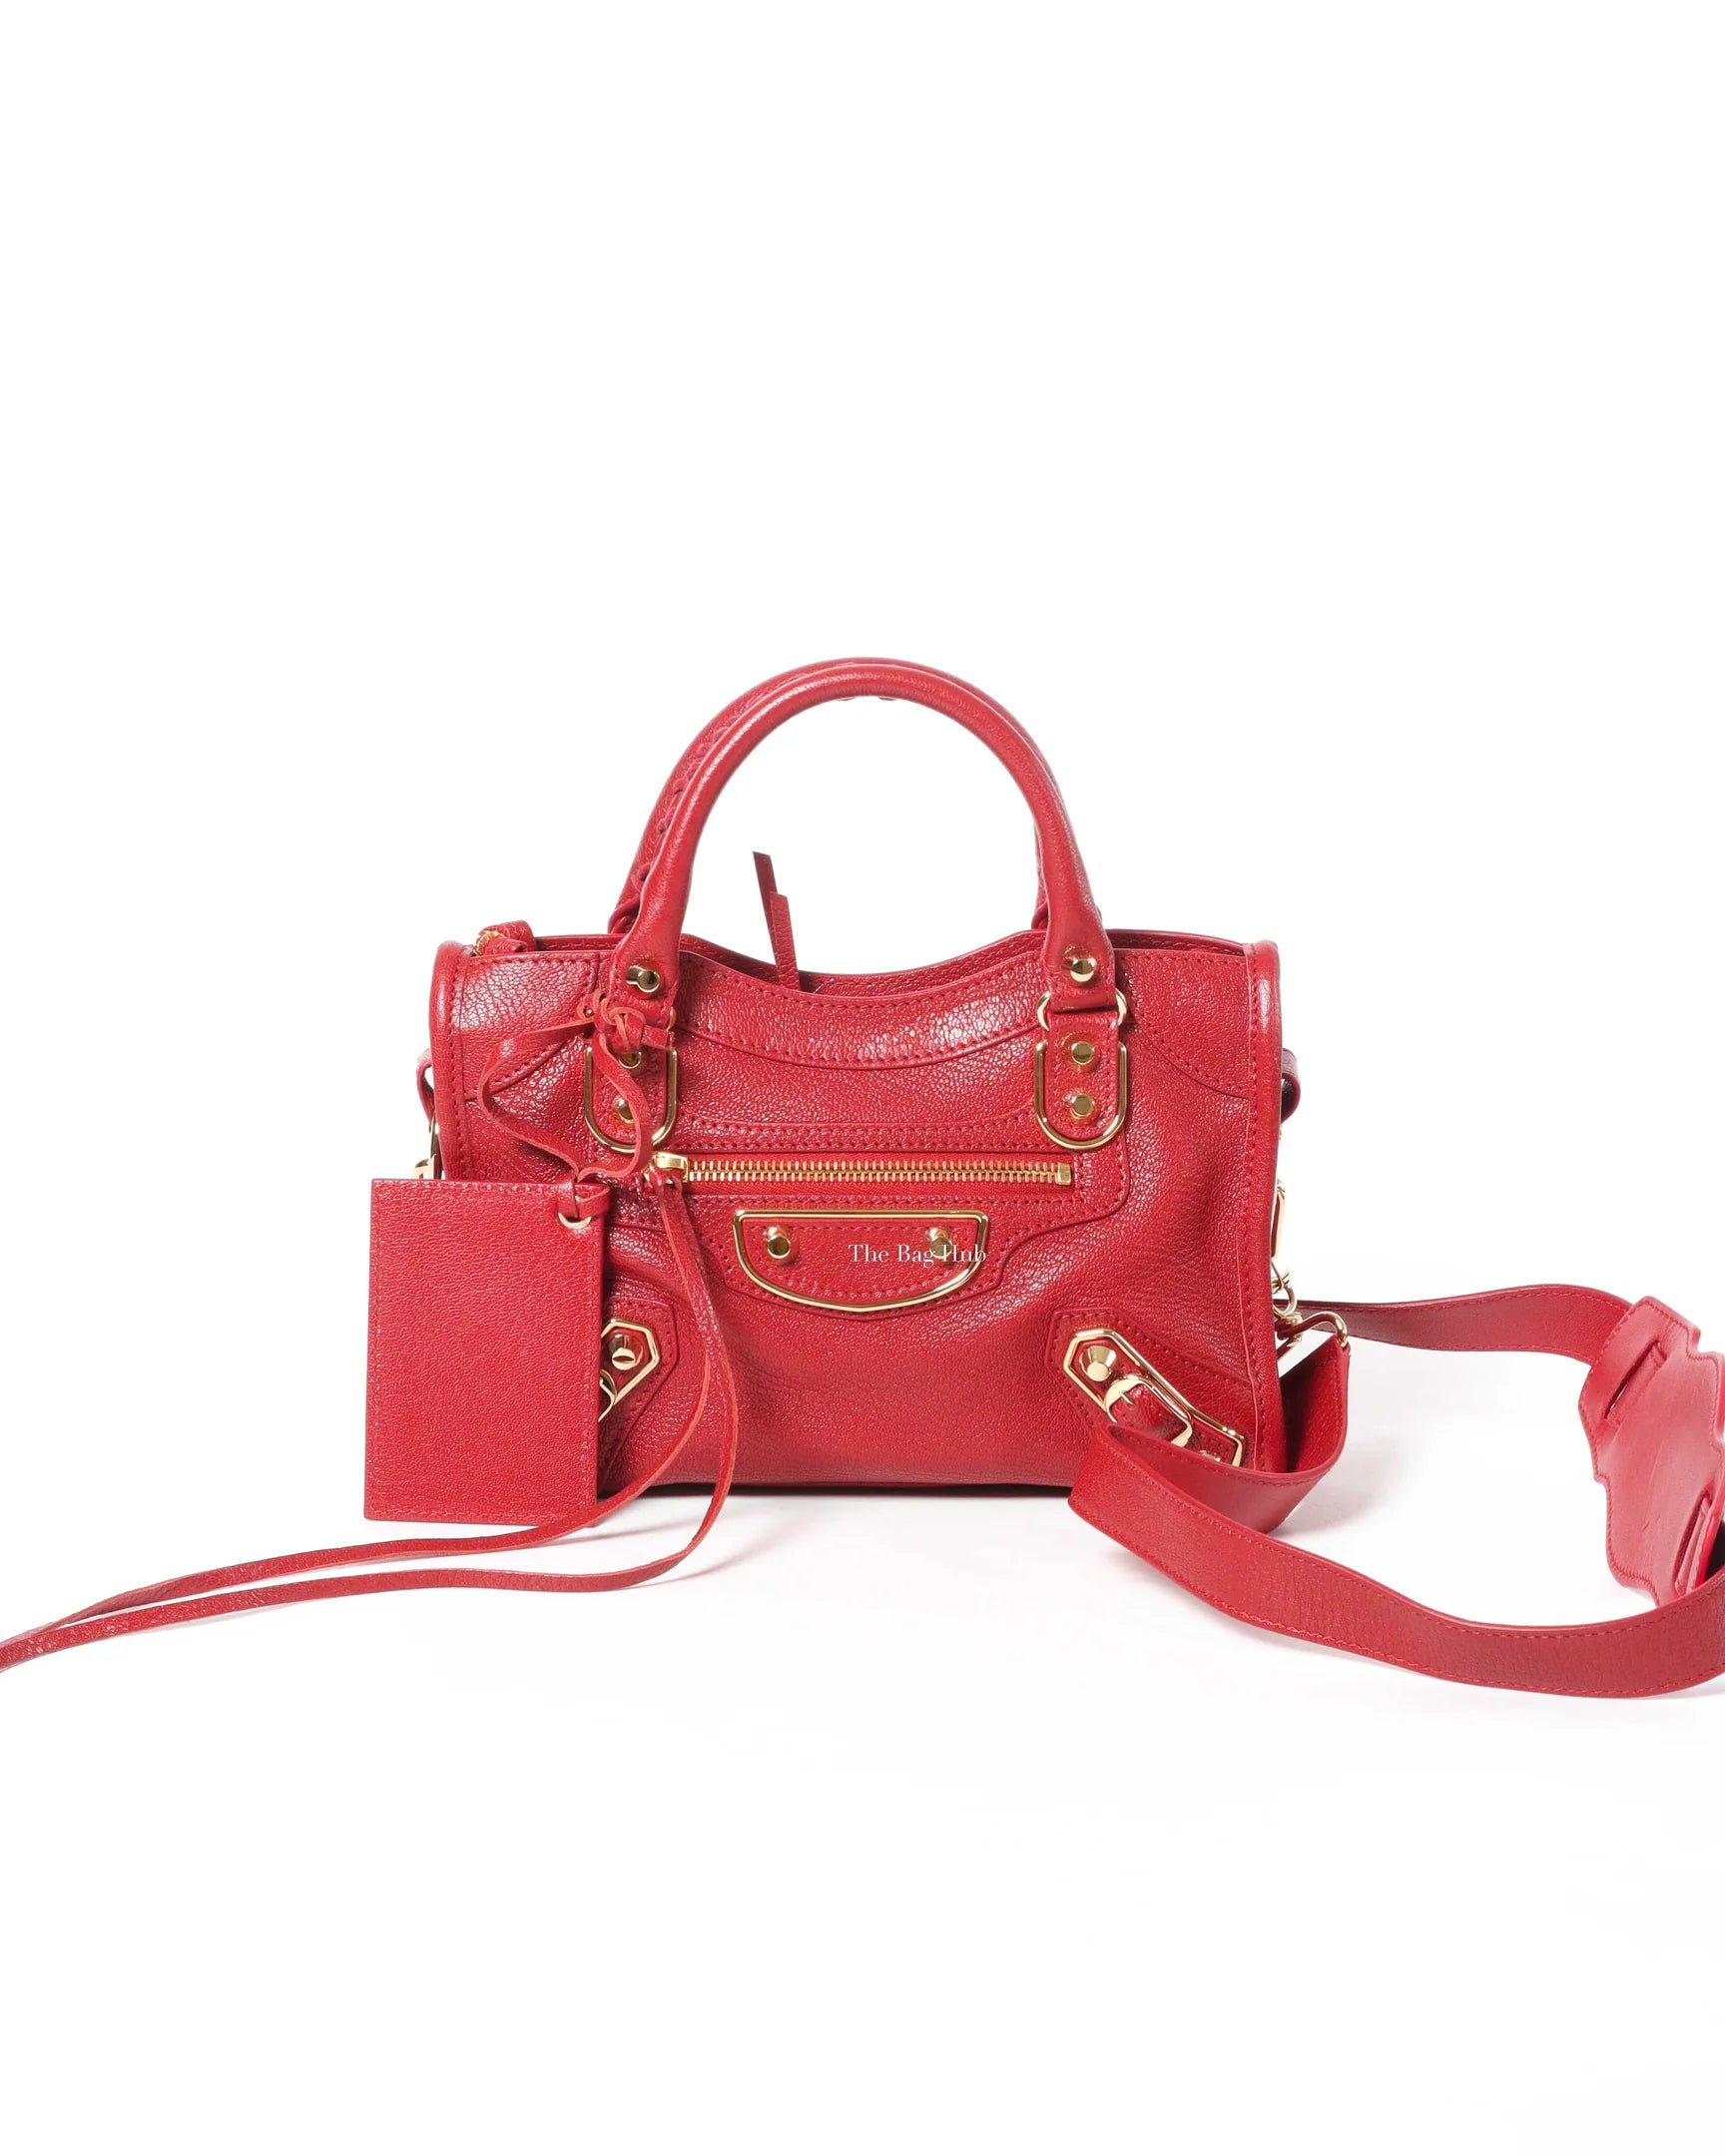 Balenciaga Red Mini Bag to rent, Valentine's day, Date night - designer tas huren Nederland, België